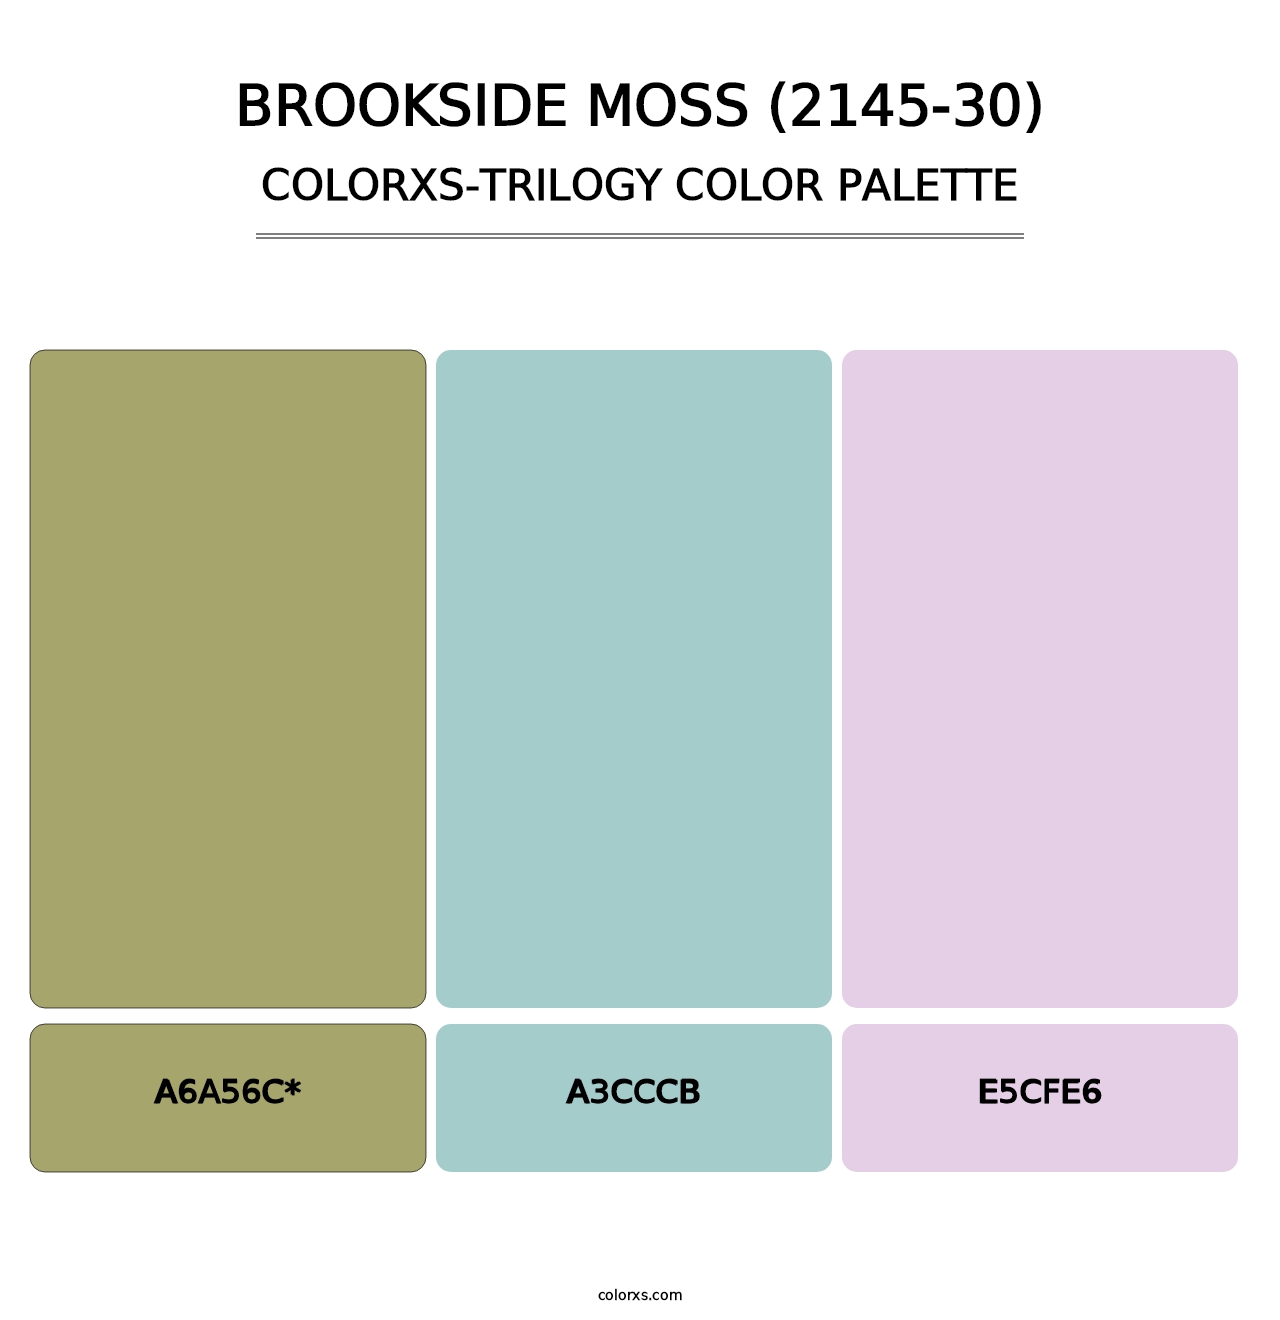 Brookside Moss (2145-30) - Colorxs Trilogy Palette